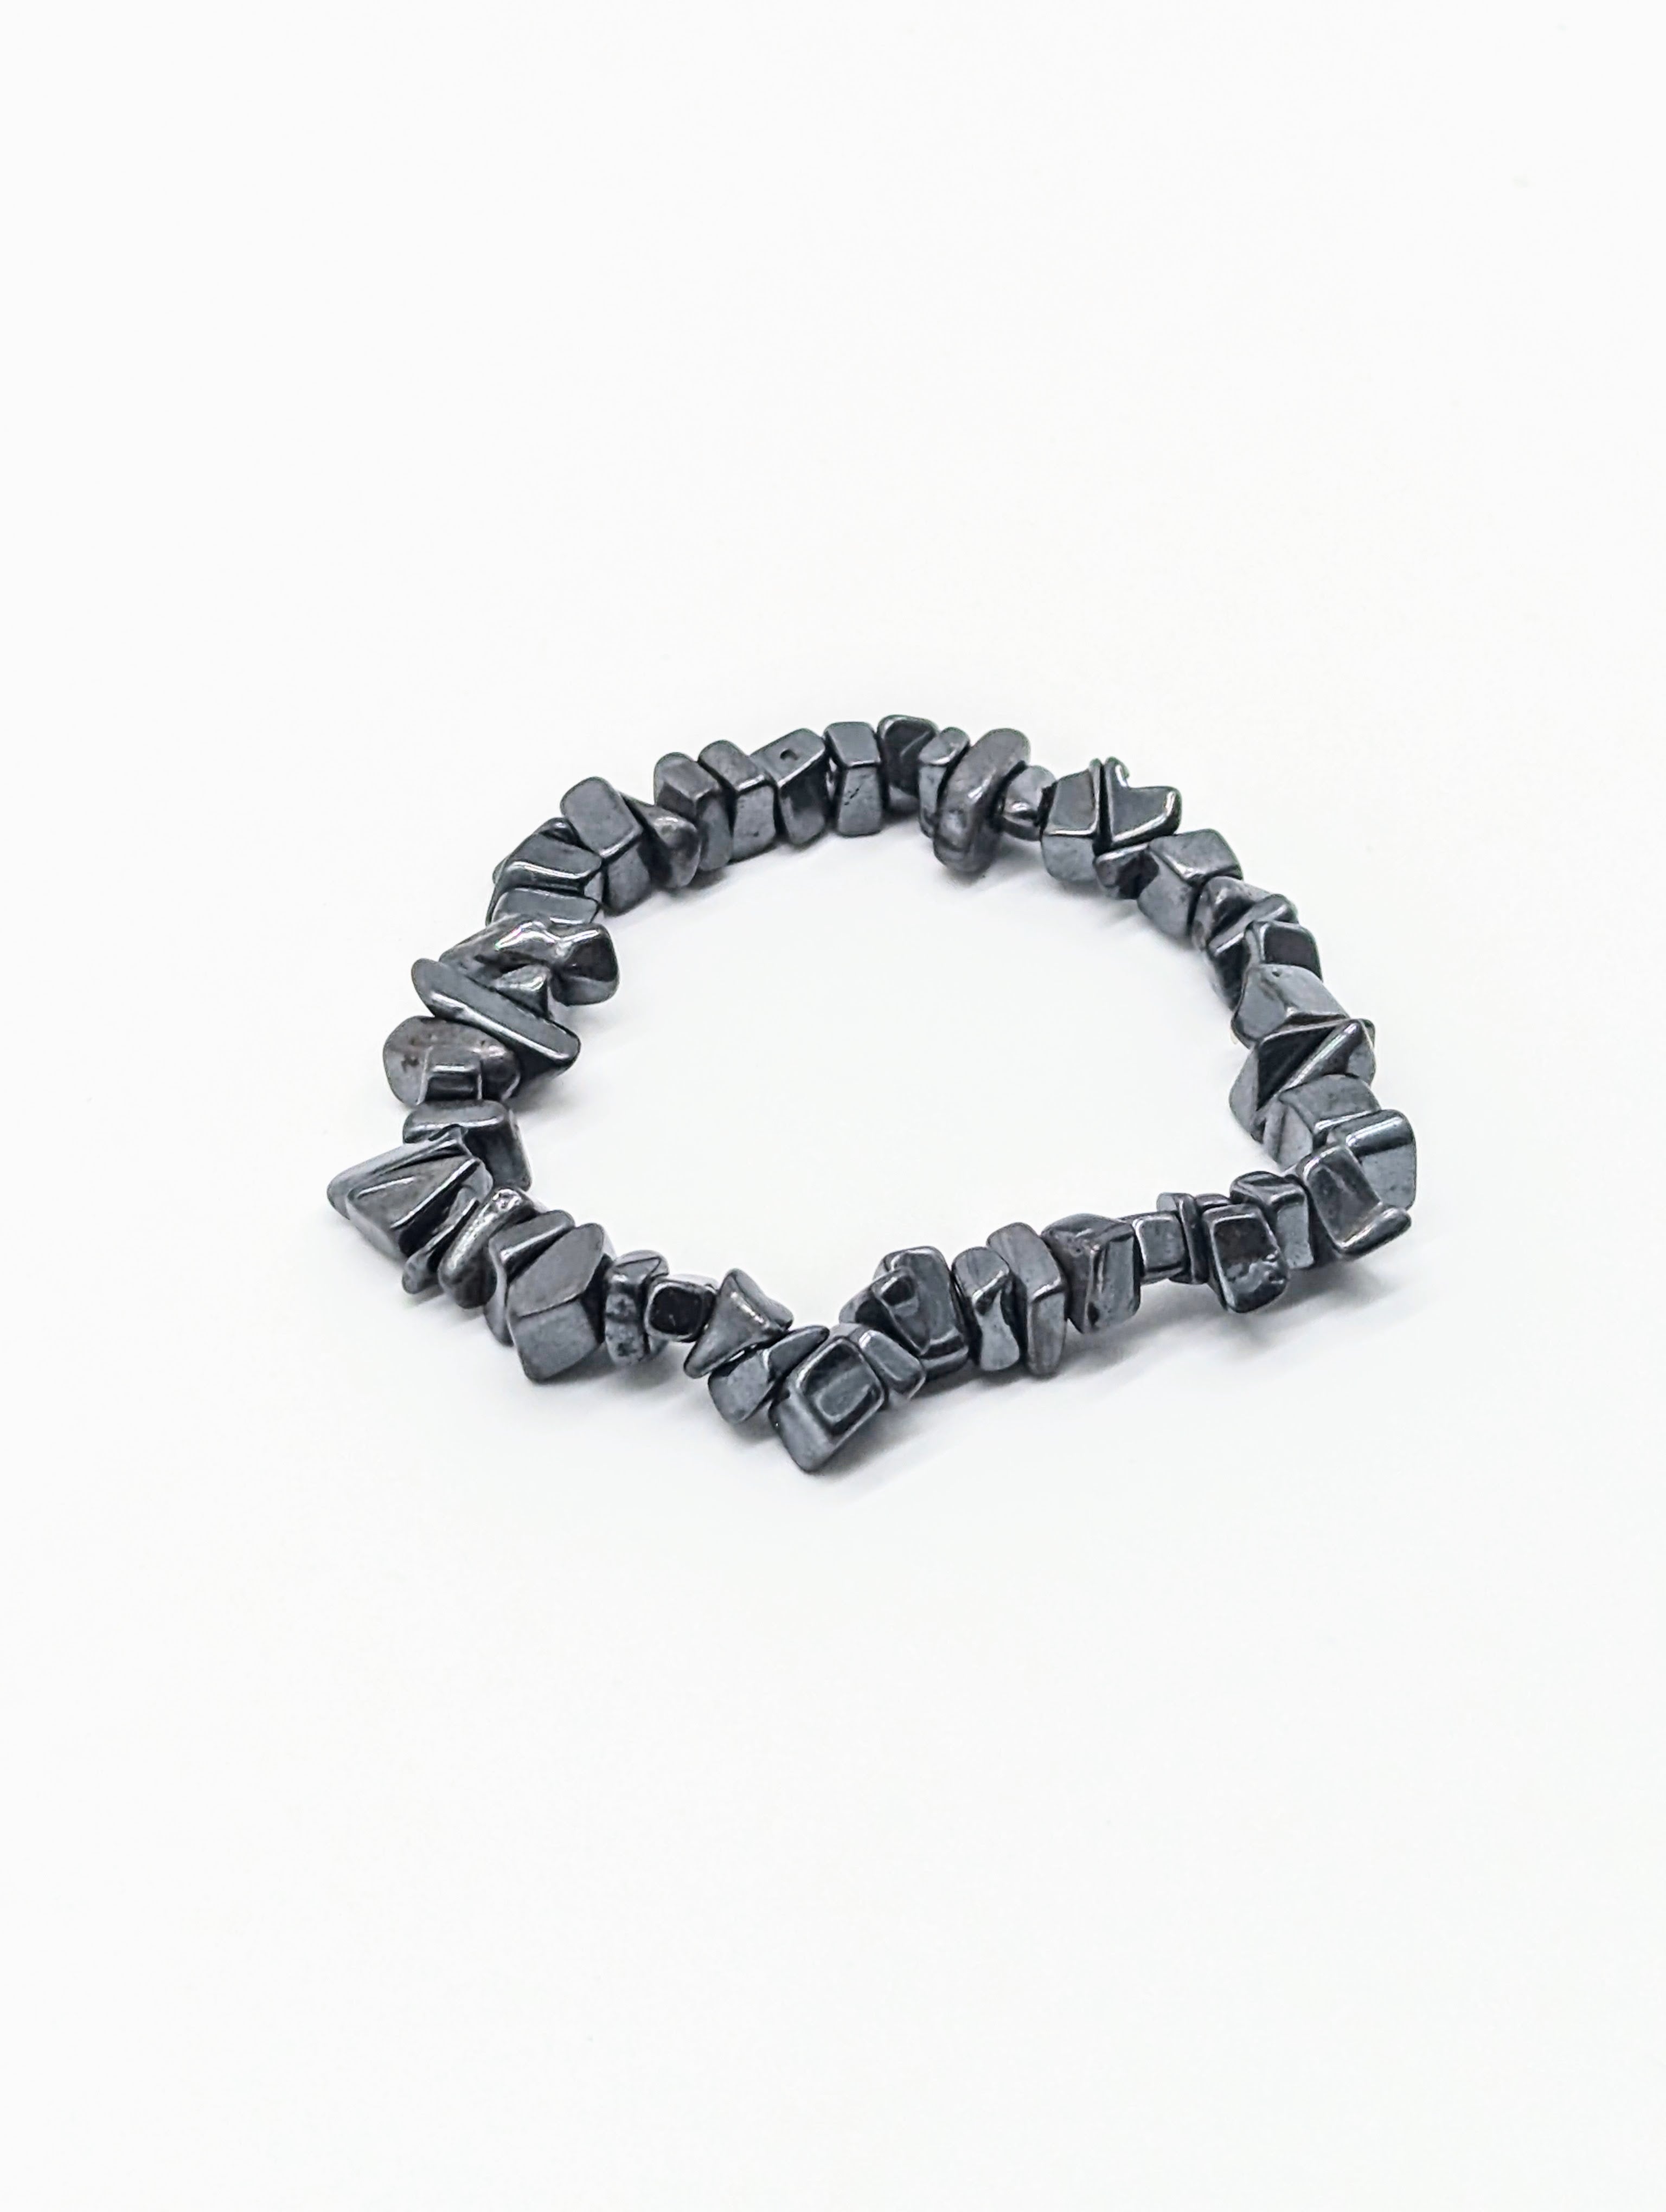 Gemstones Chakras Bracelets - Sun Drunk